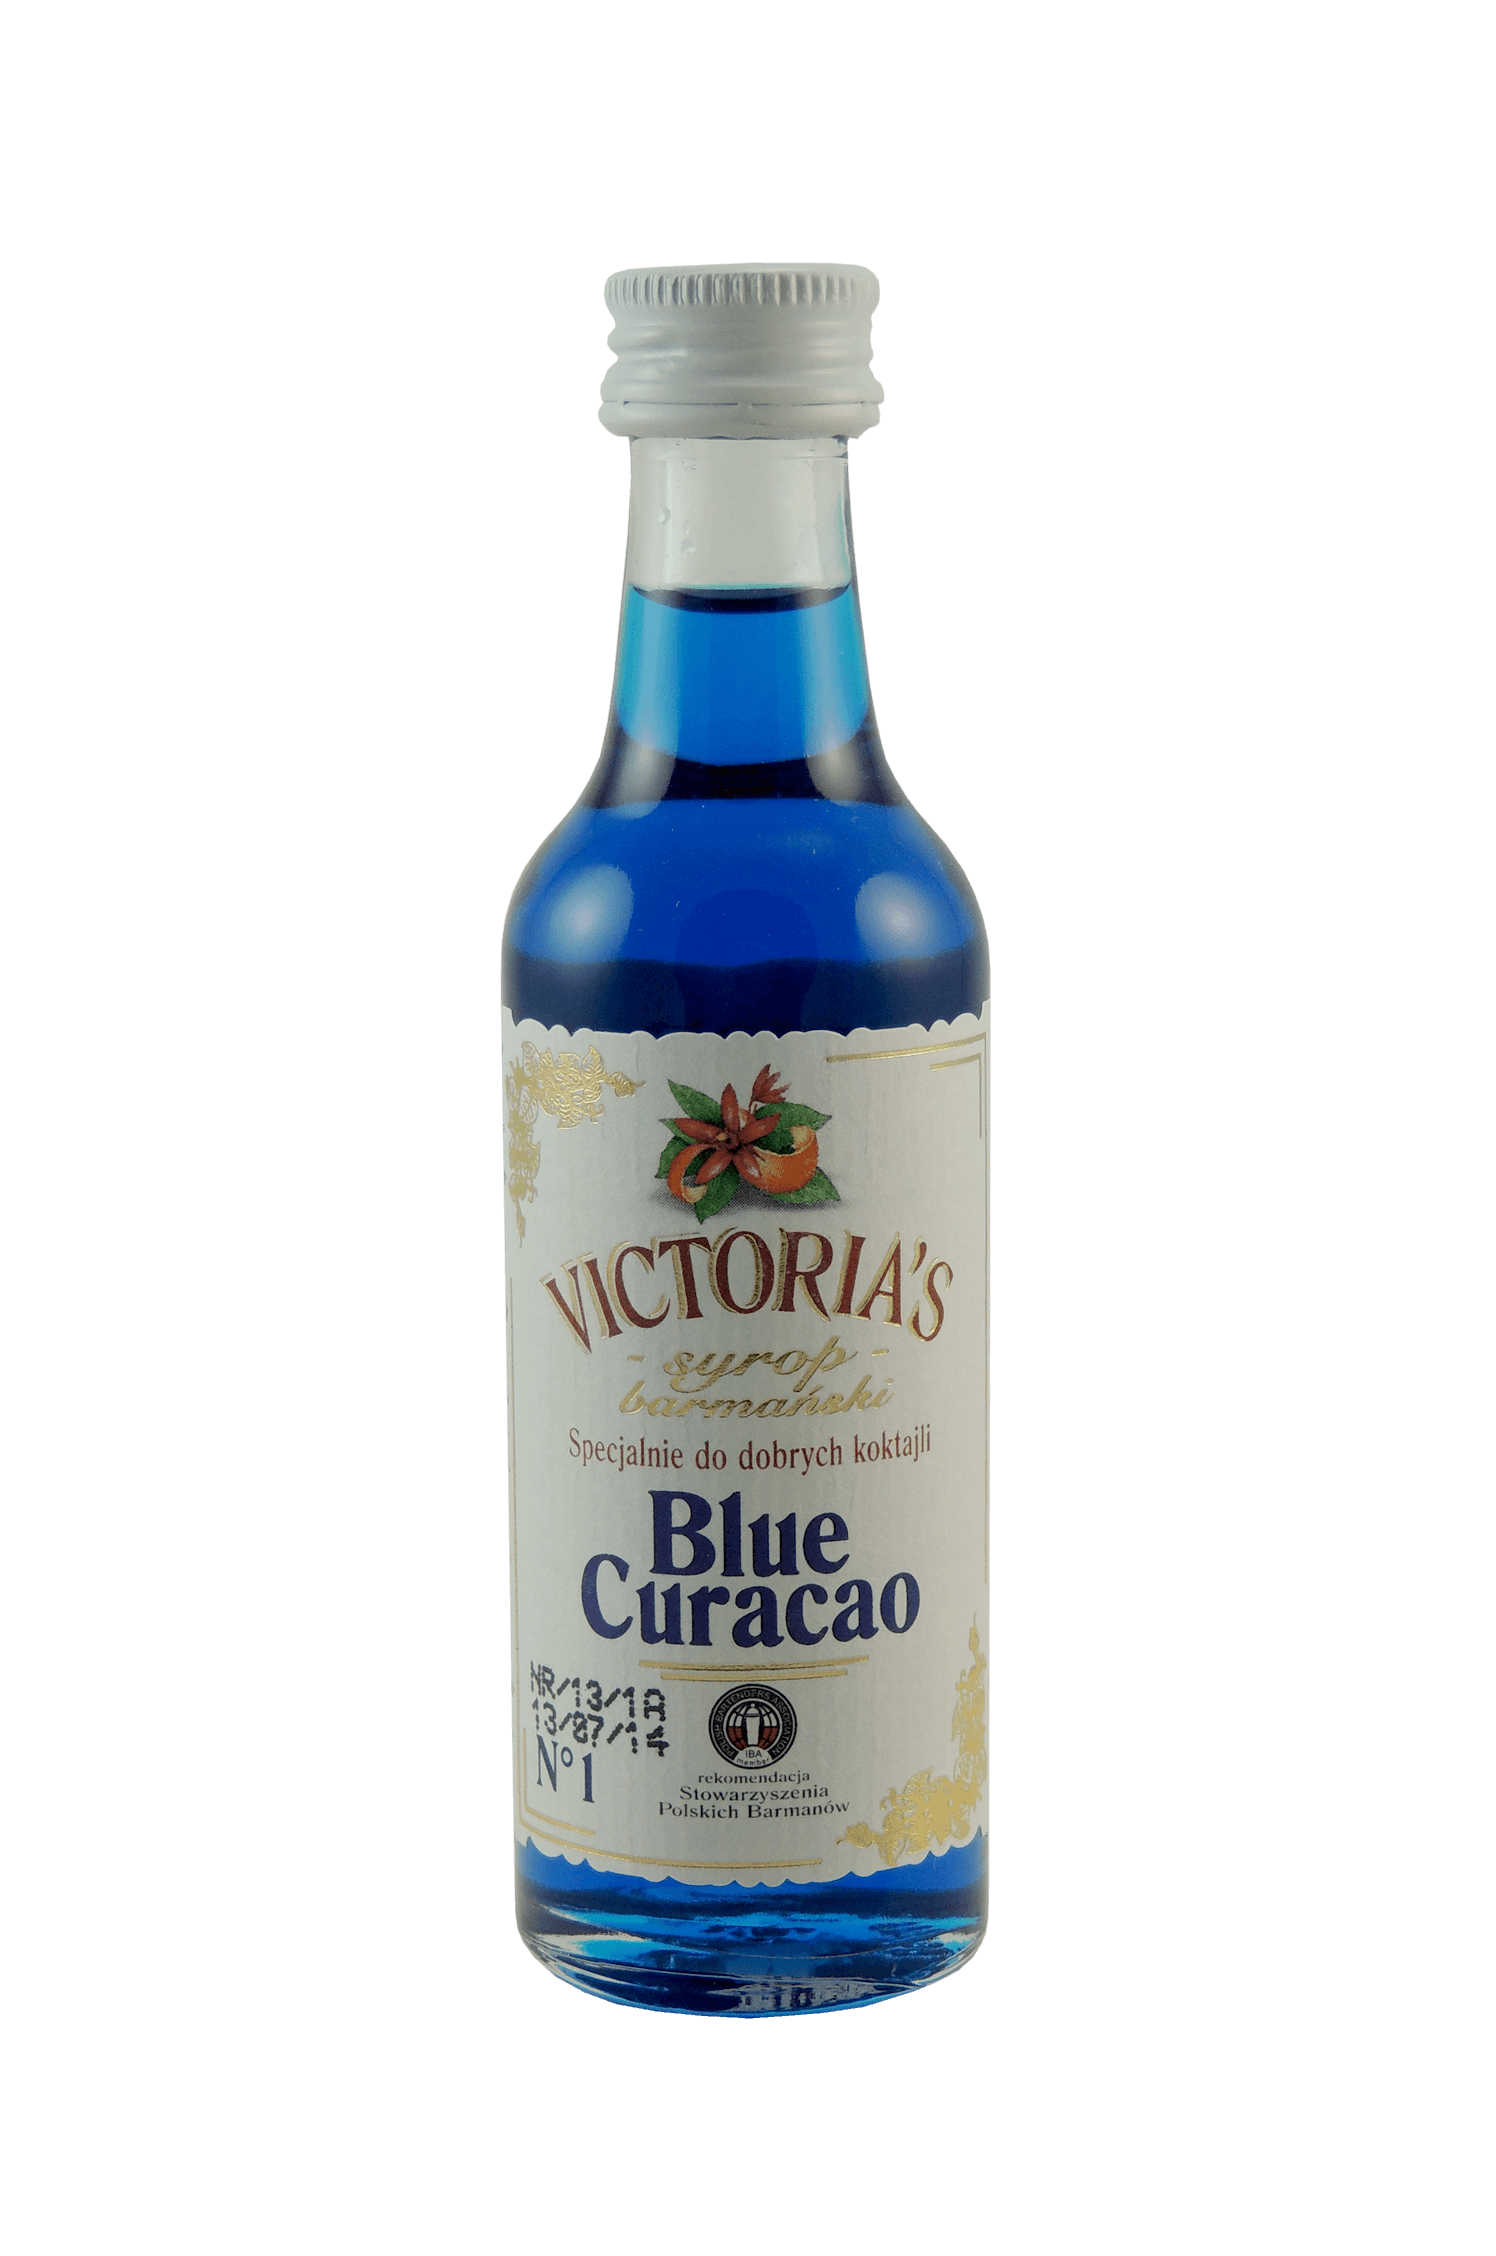 Victoria’s Blue Curacao